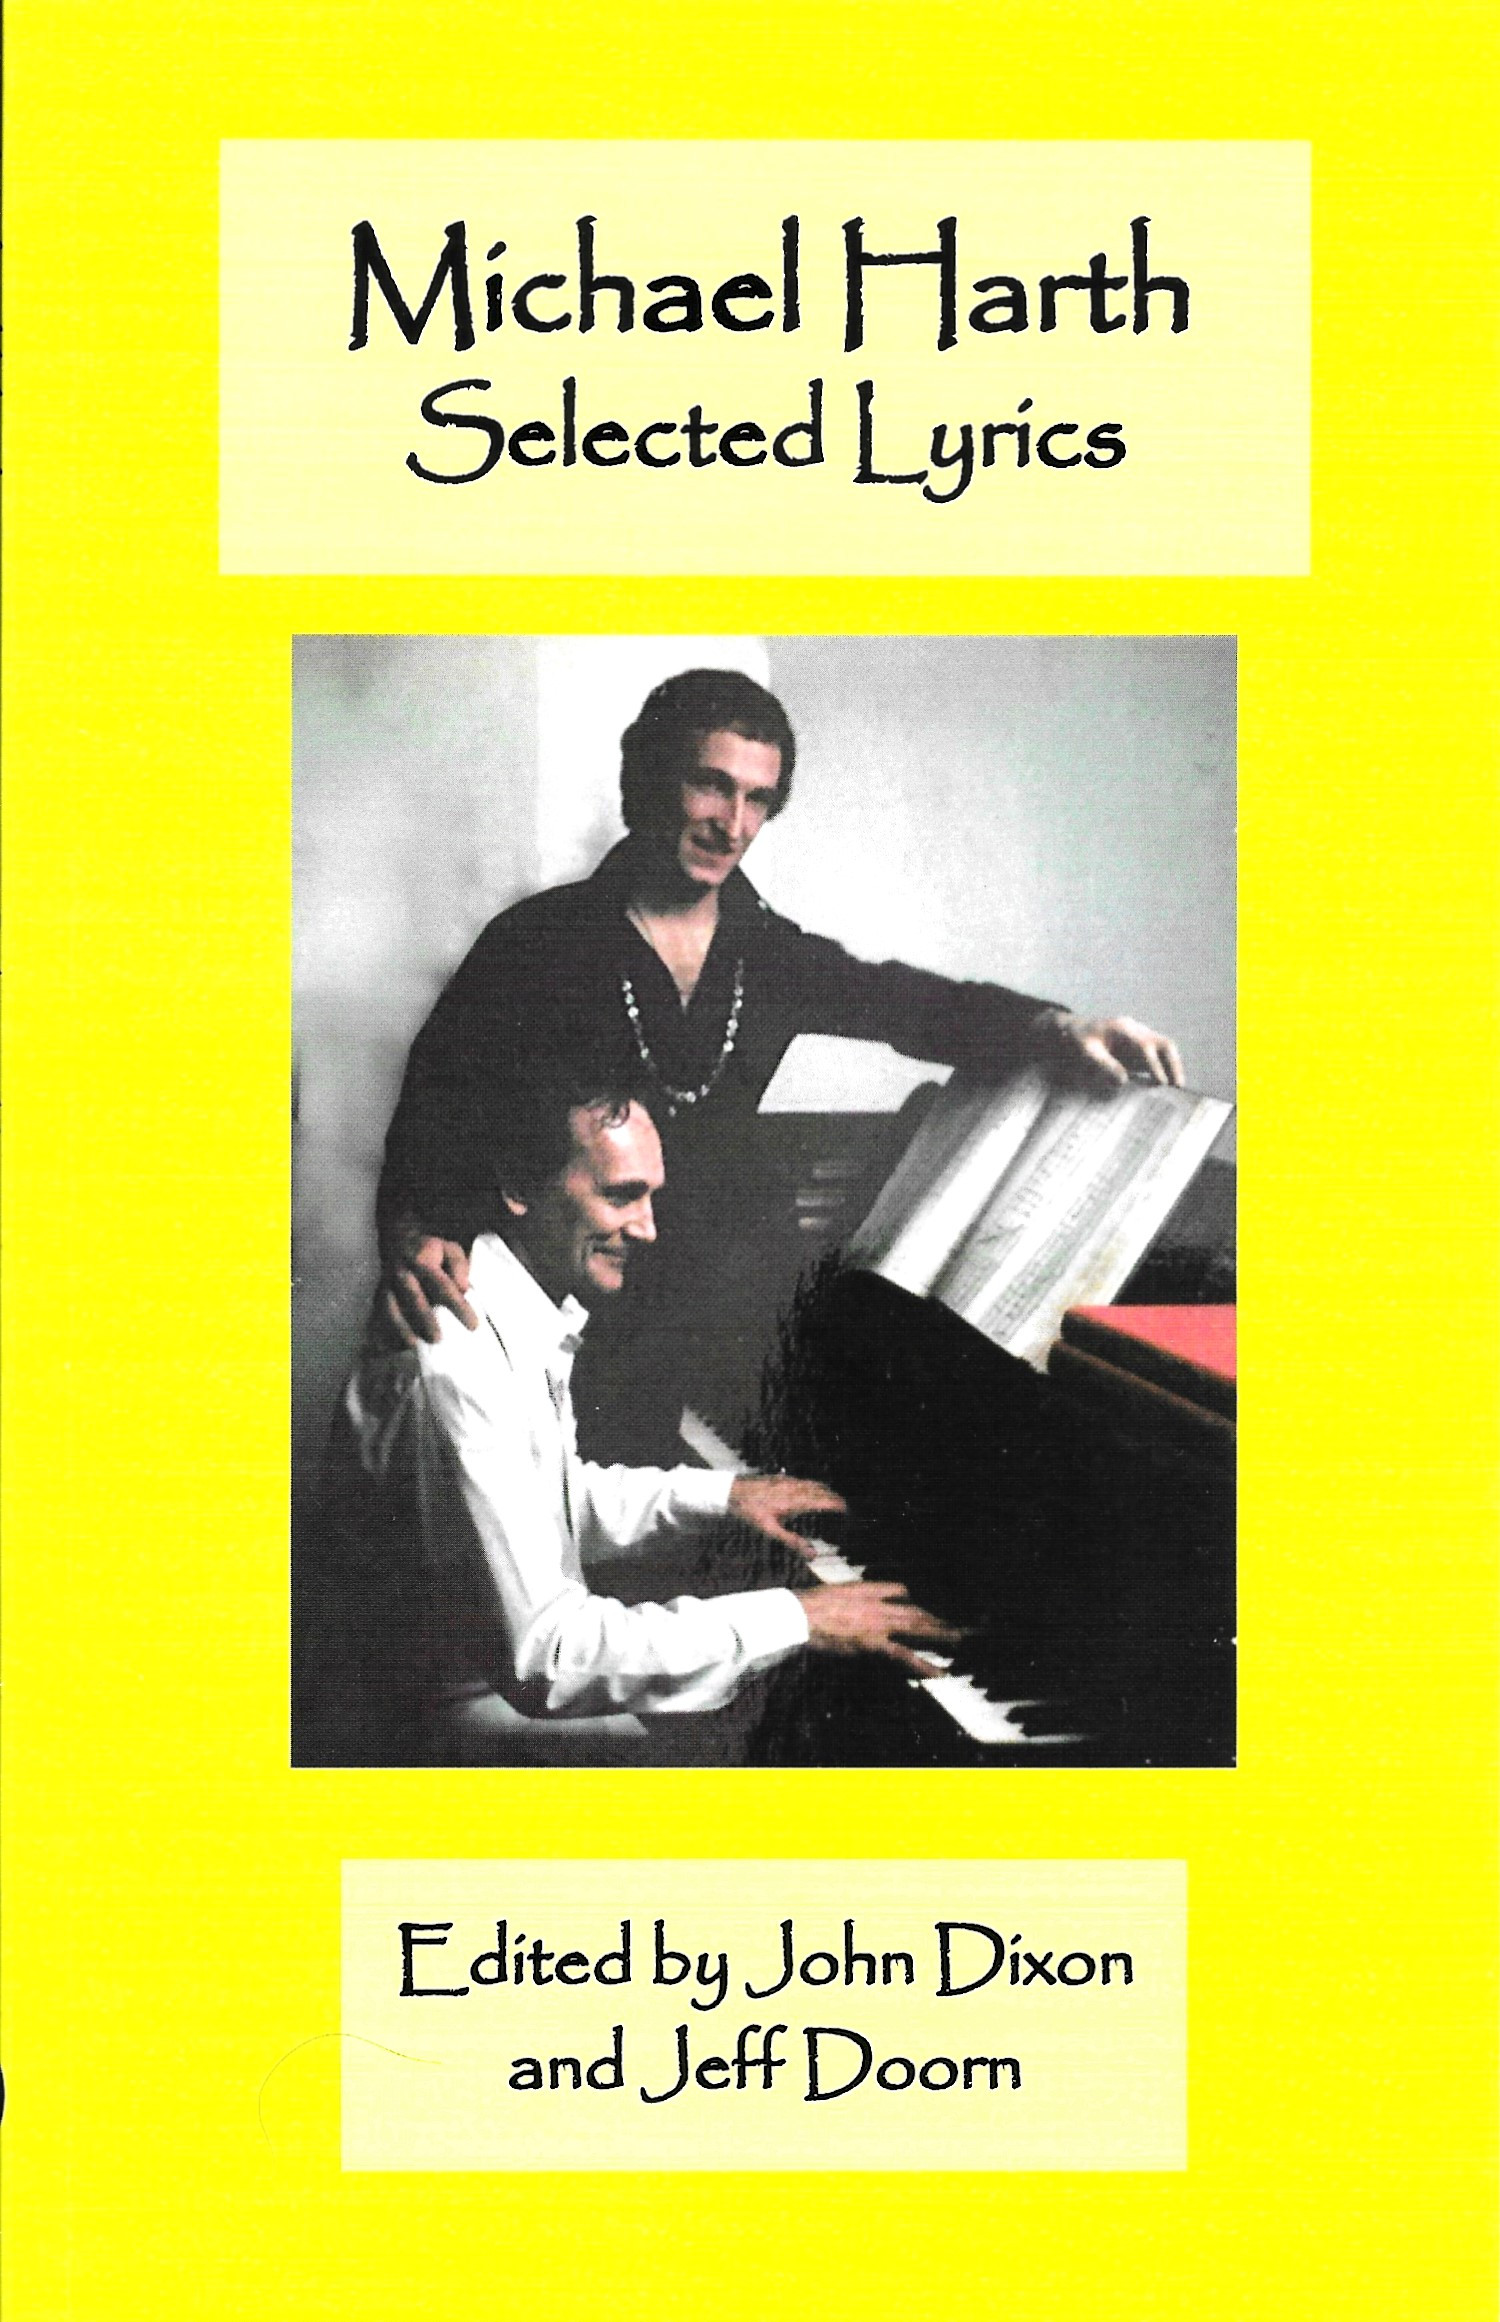 Cover of "MIchael Harth: Selected Lyrics"